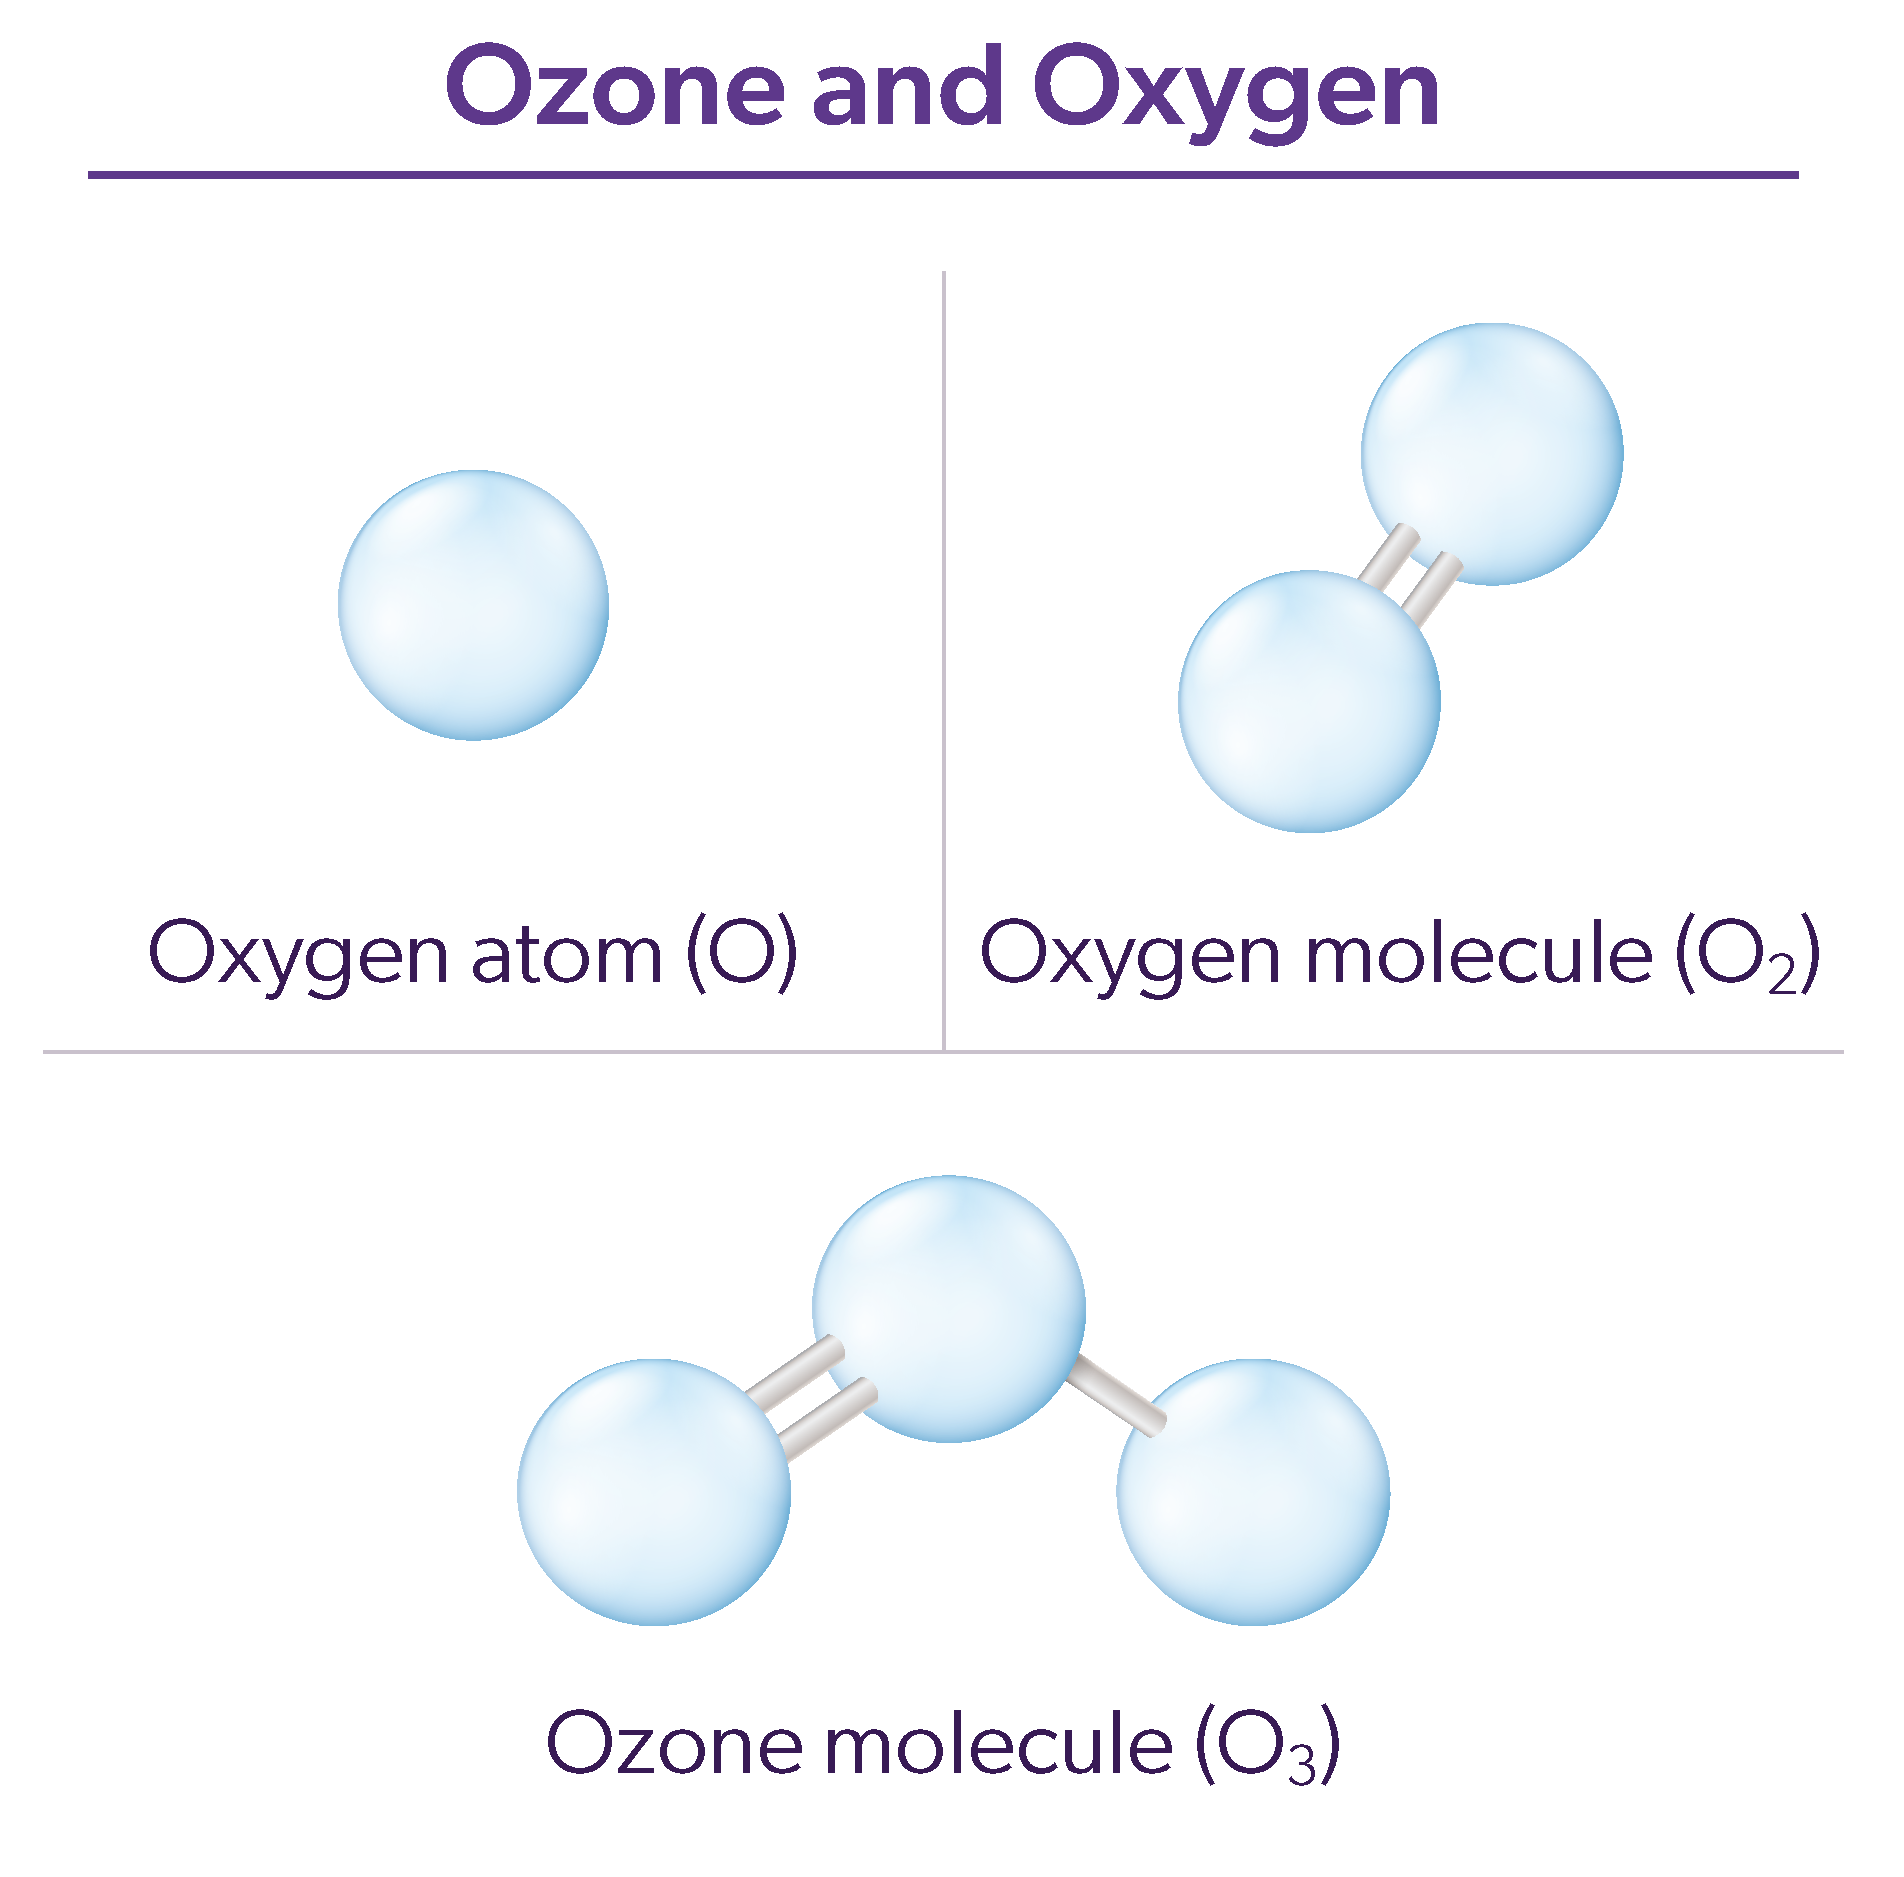 Ozone and Oxygen